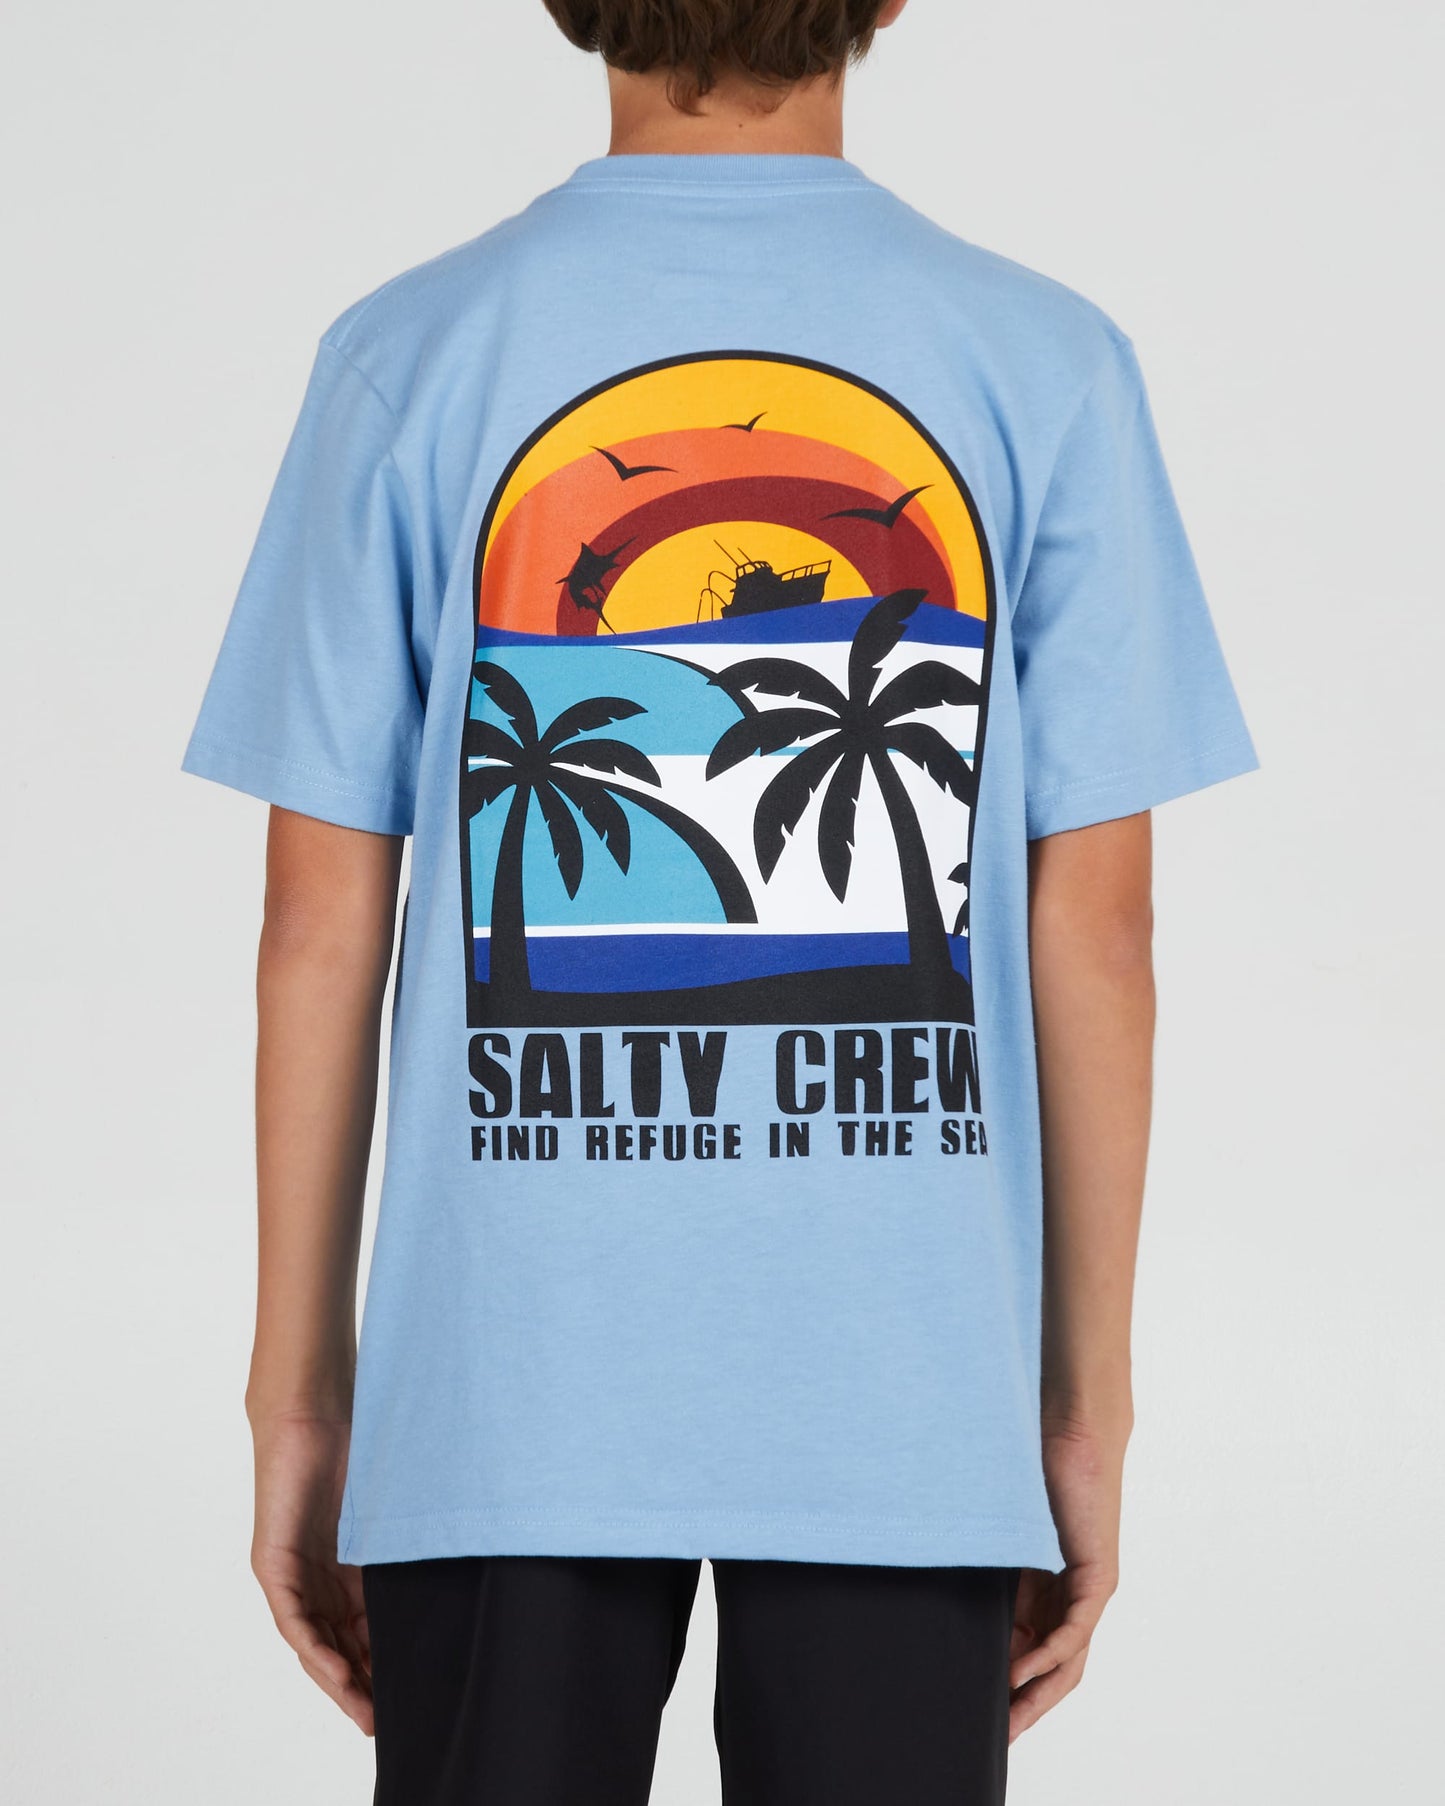 Salty crew T-SHIRTS S/S BEACH DAY BOYS S/S TEE - Marine Blue in Marine Blue